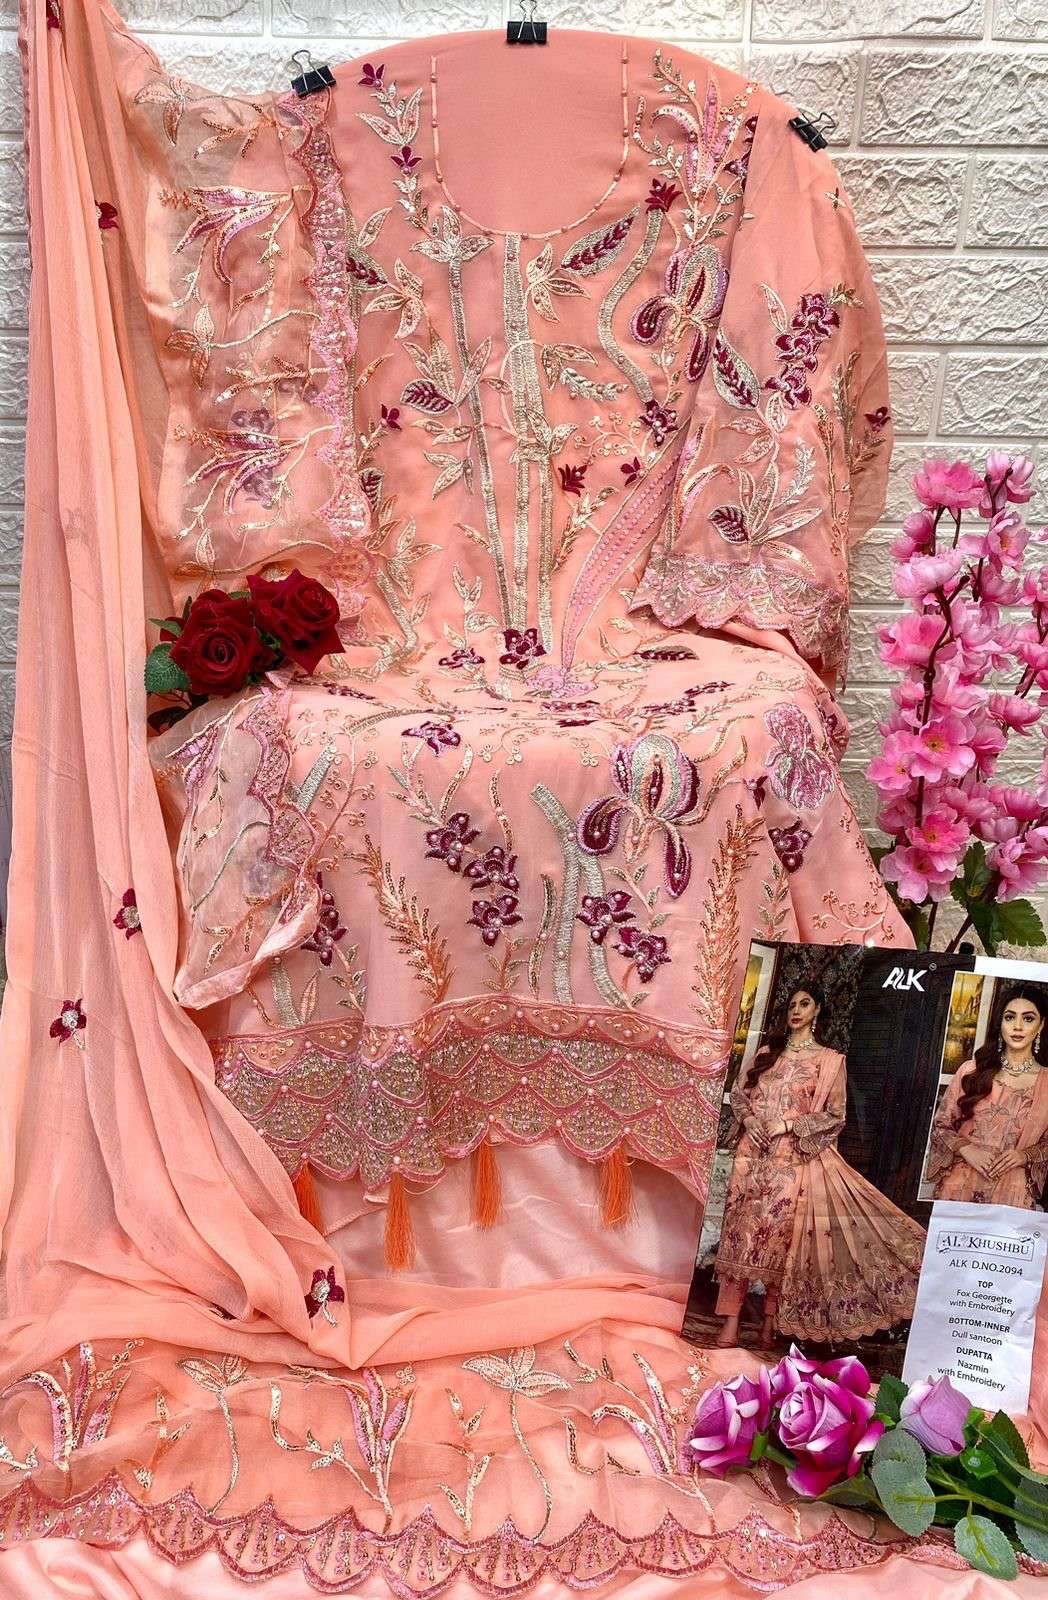 al khushbu 2094 series fancy look designer pakistani salwar kameez online wholesale price surat 